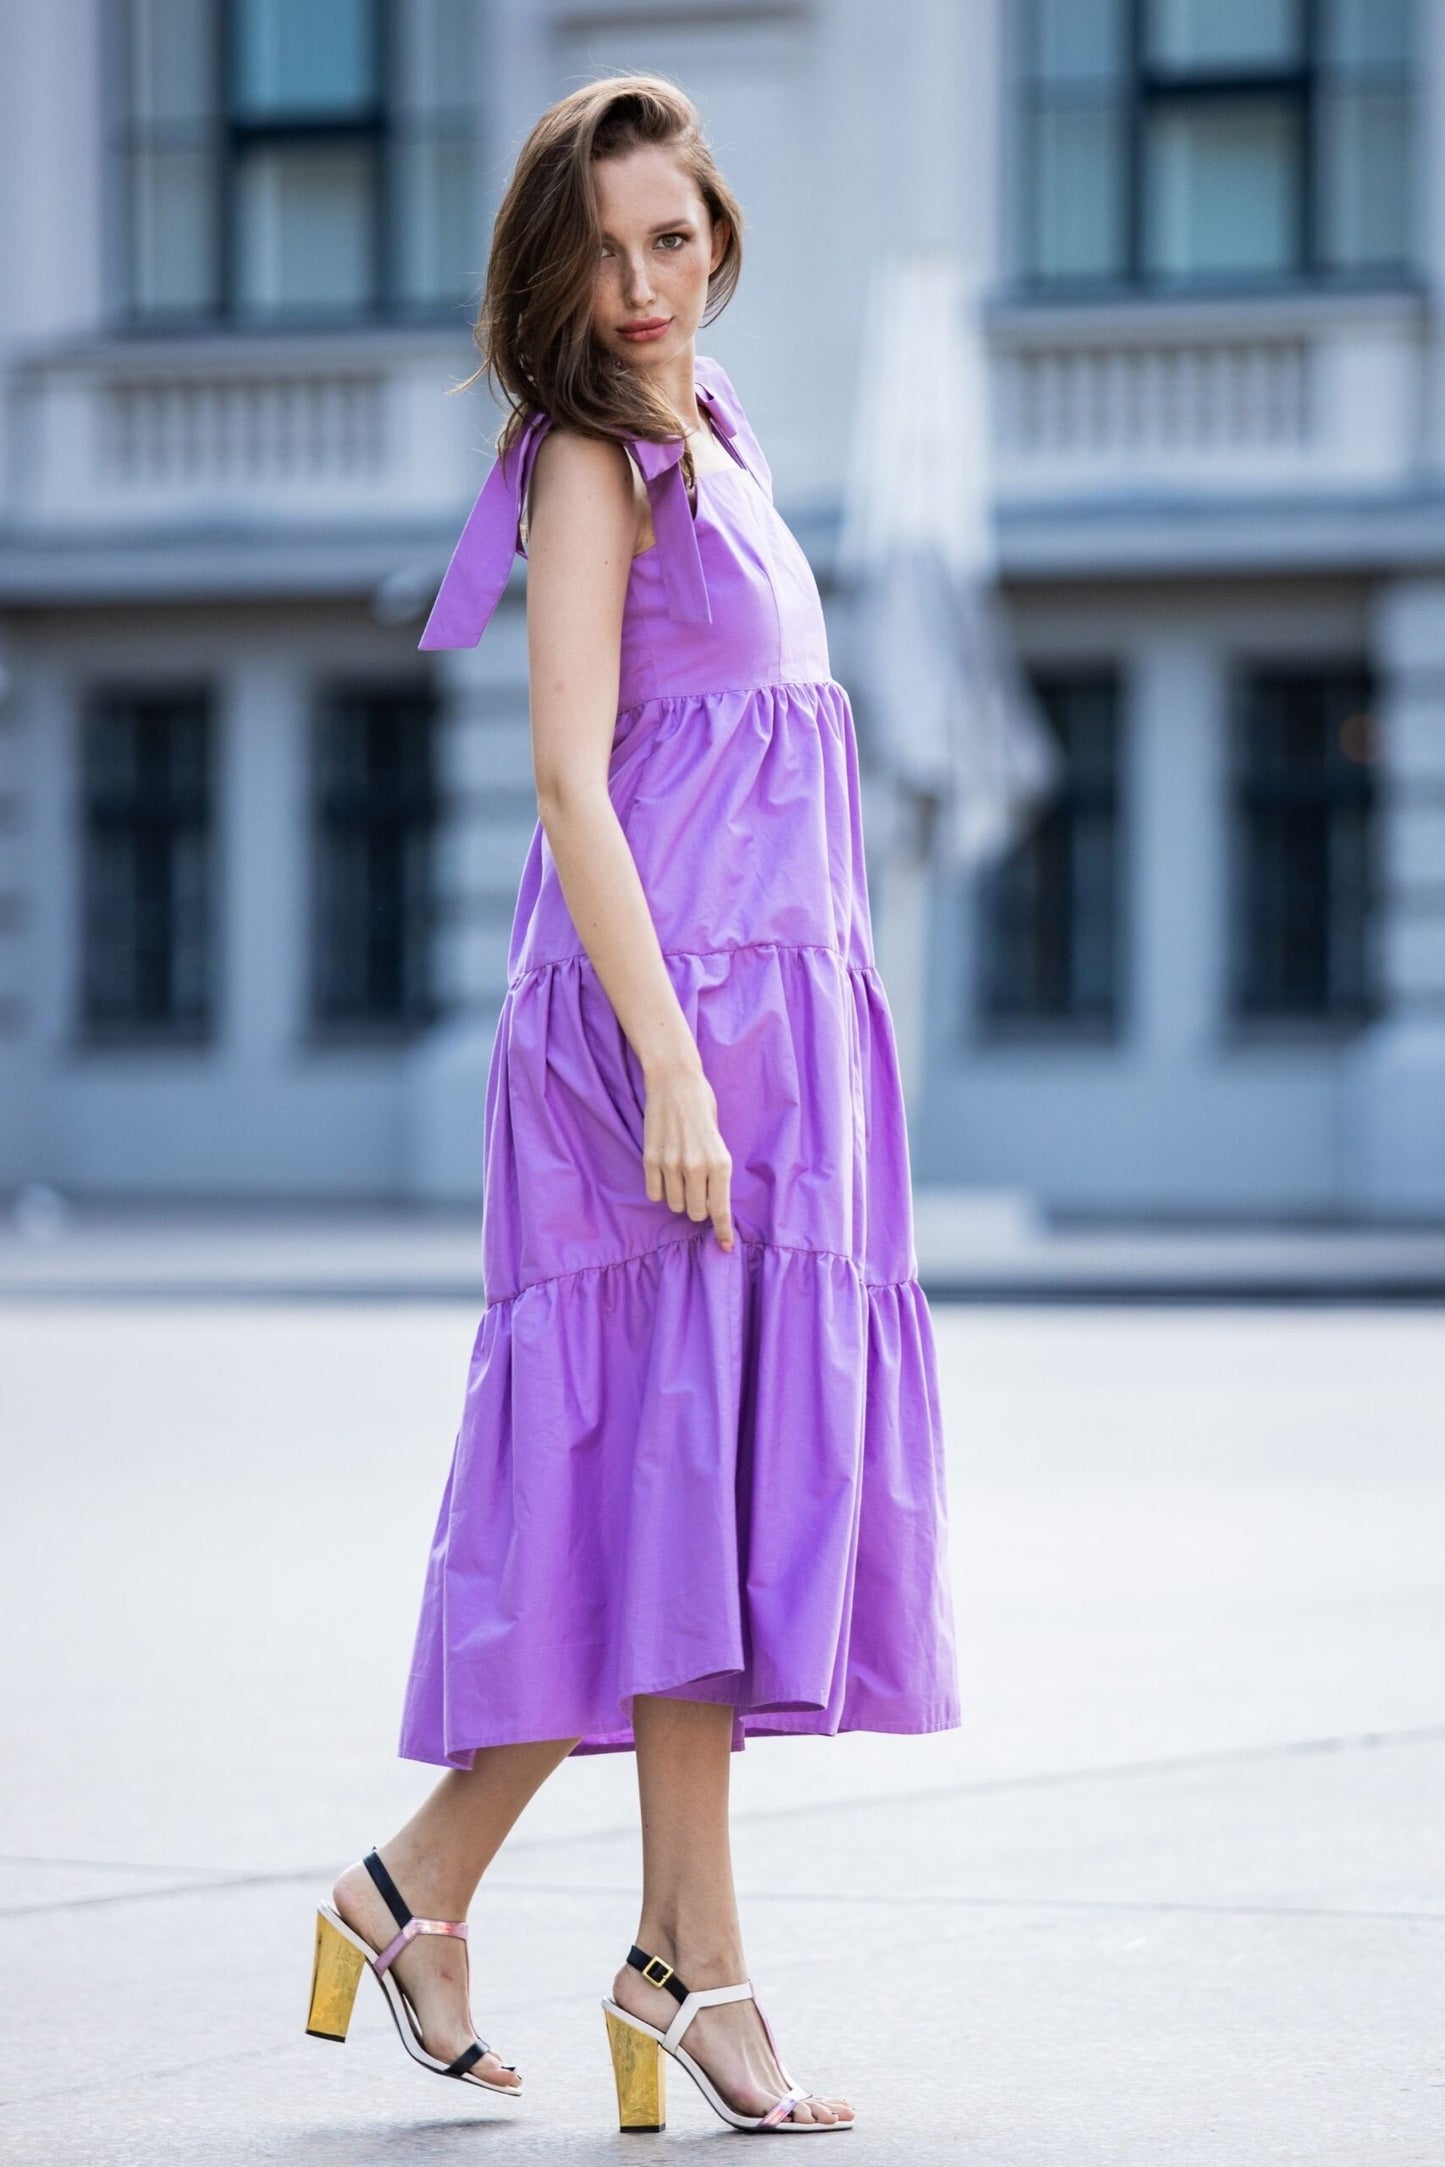 Purple cotton dress with bows